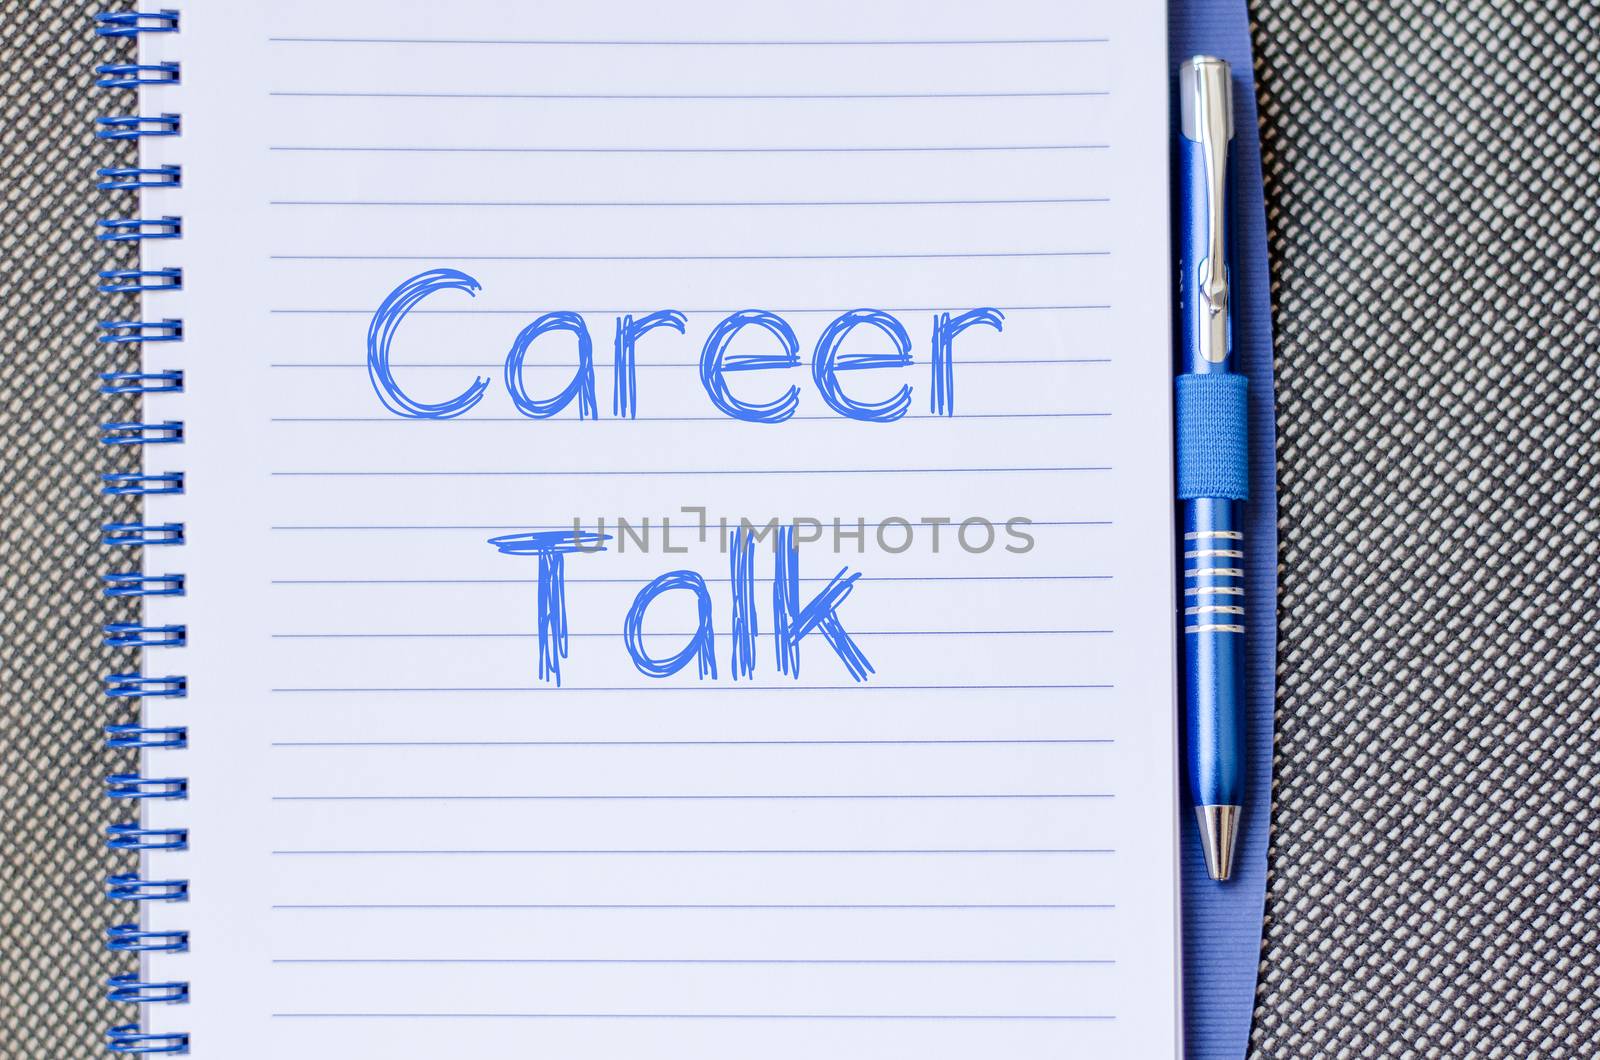 Career talk write on notebook by eenevski